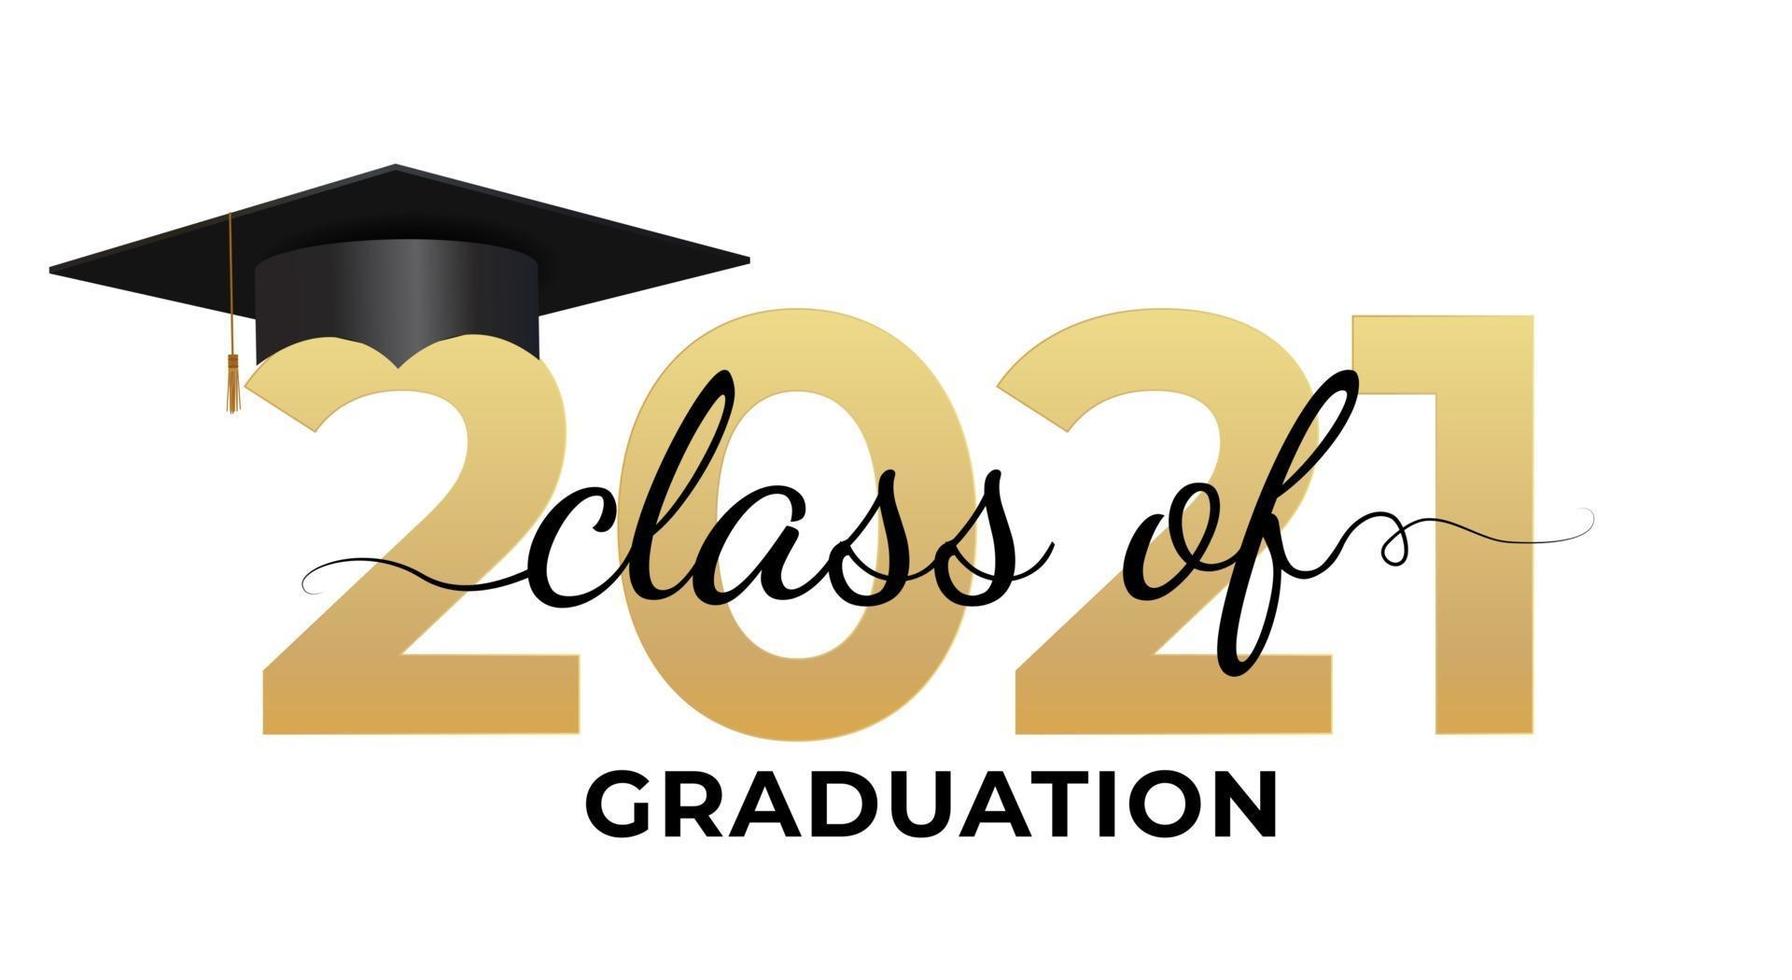 Graduation class of 2021 with graduation hat vector